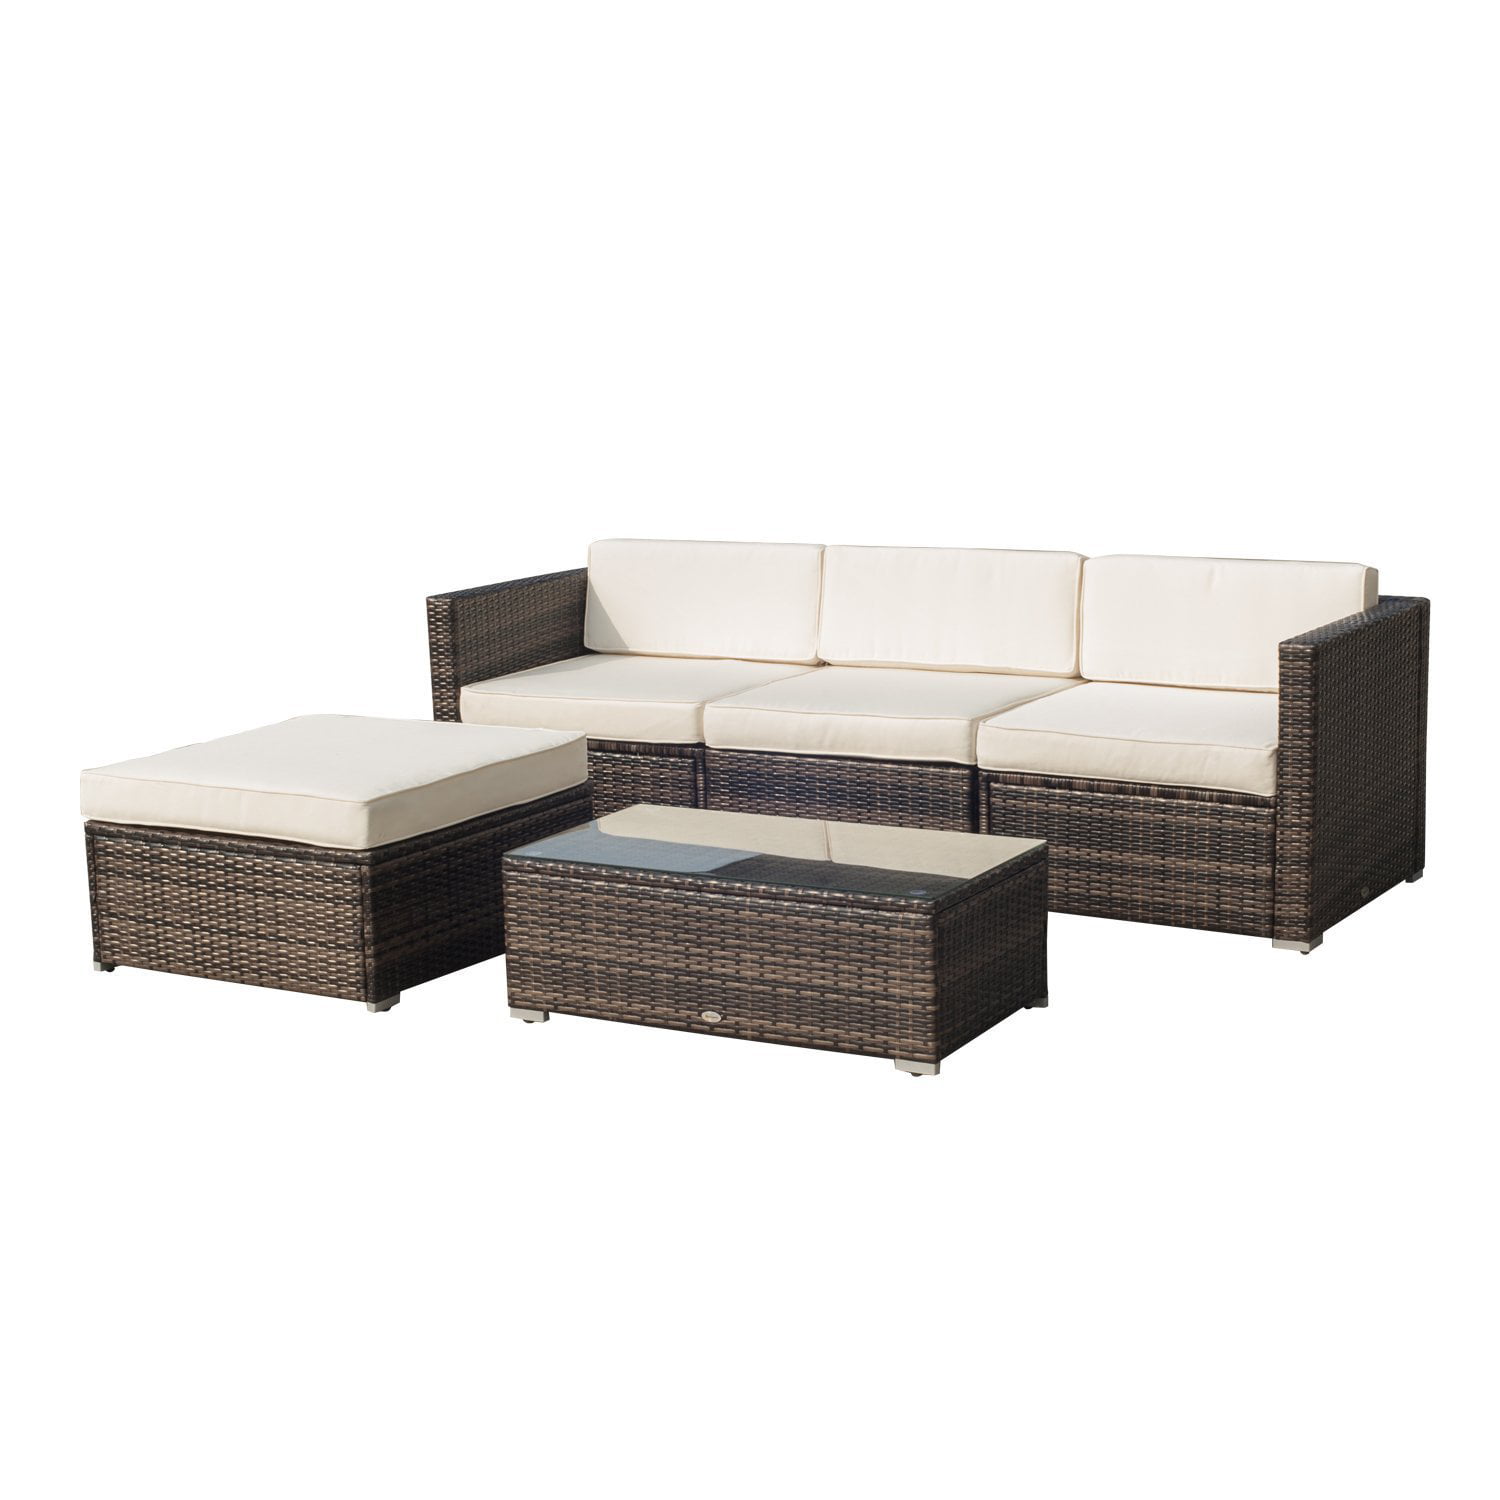 5pc Outdoor Modular Rattan Wicker Sofa, Patio Furniture 3 Piece Resin Wicker Sectional Sofa